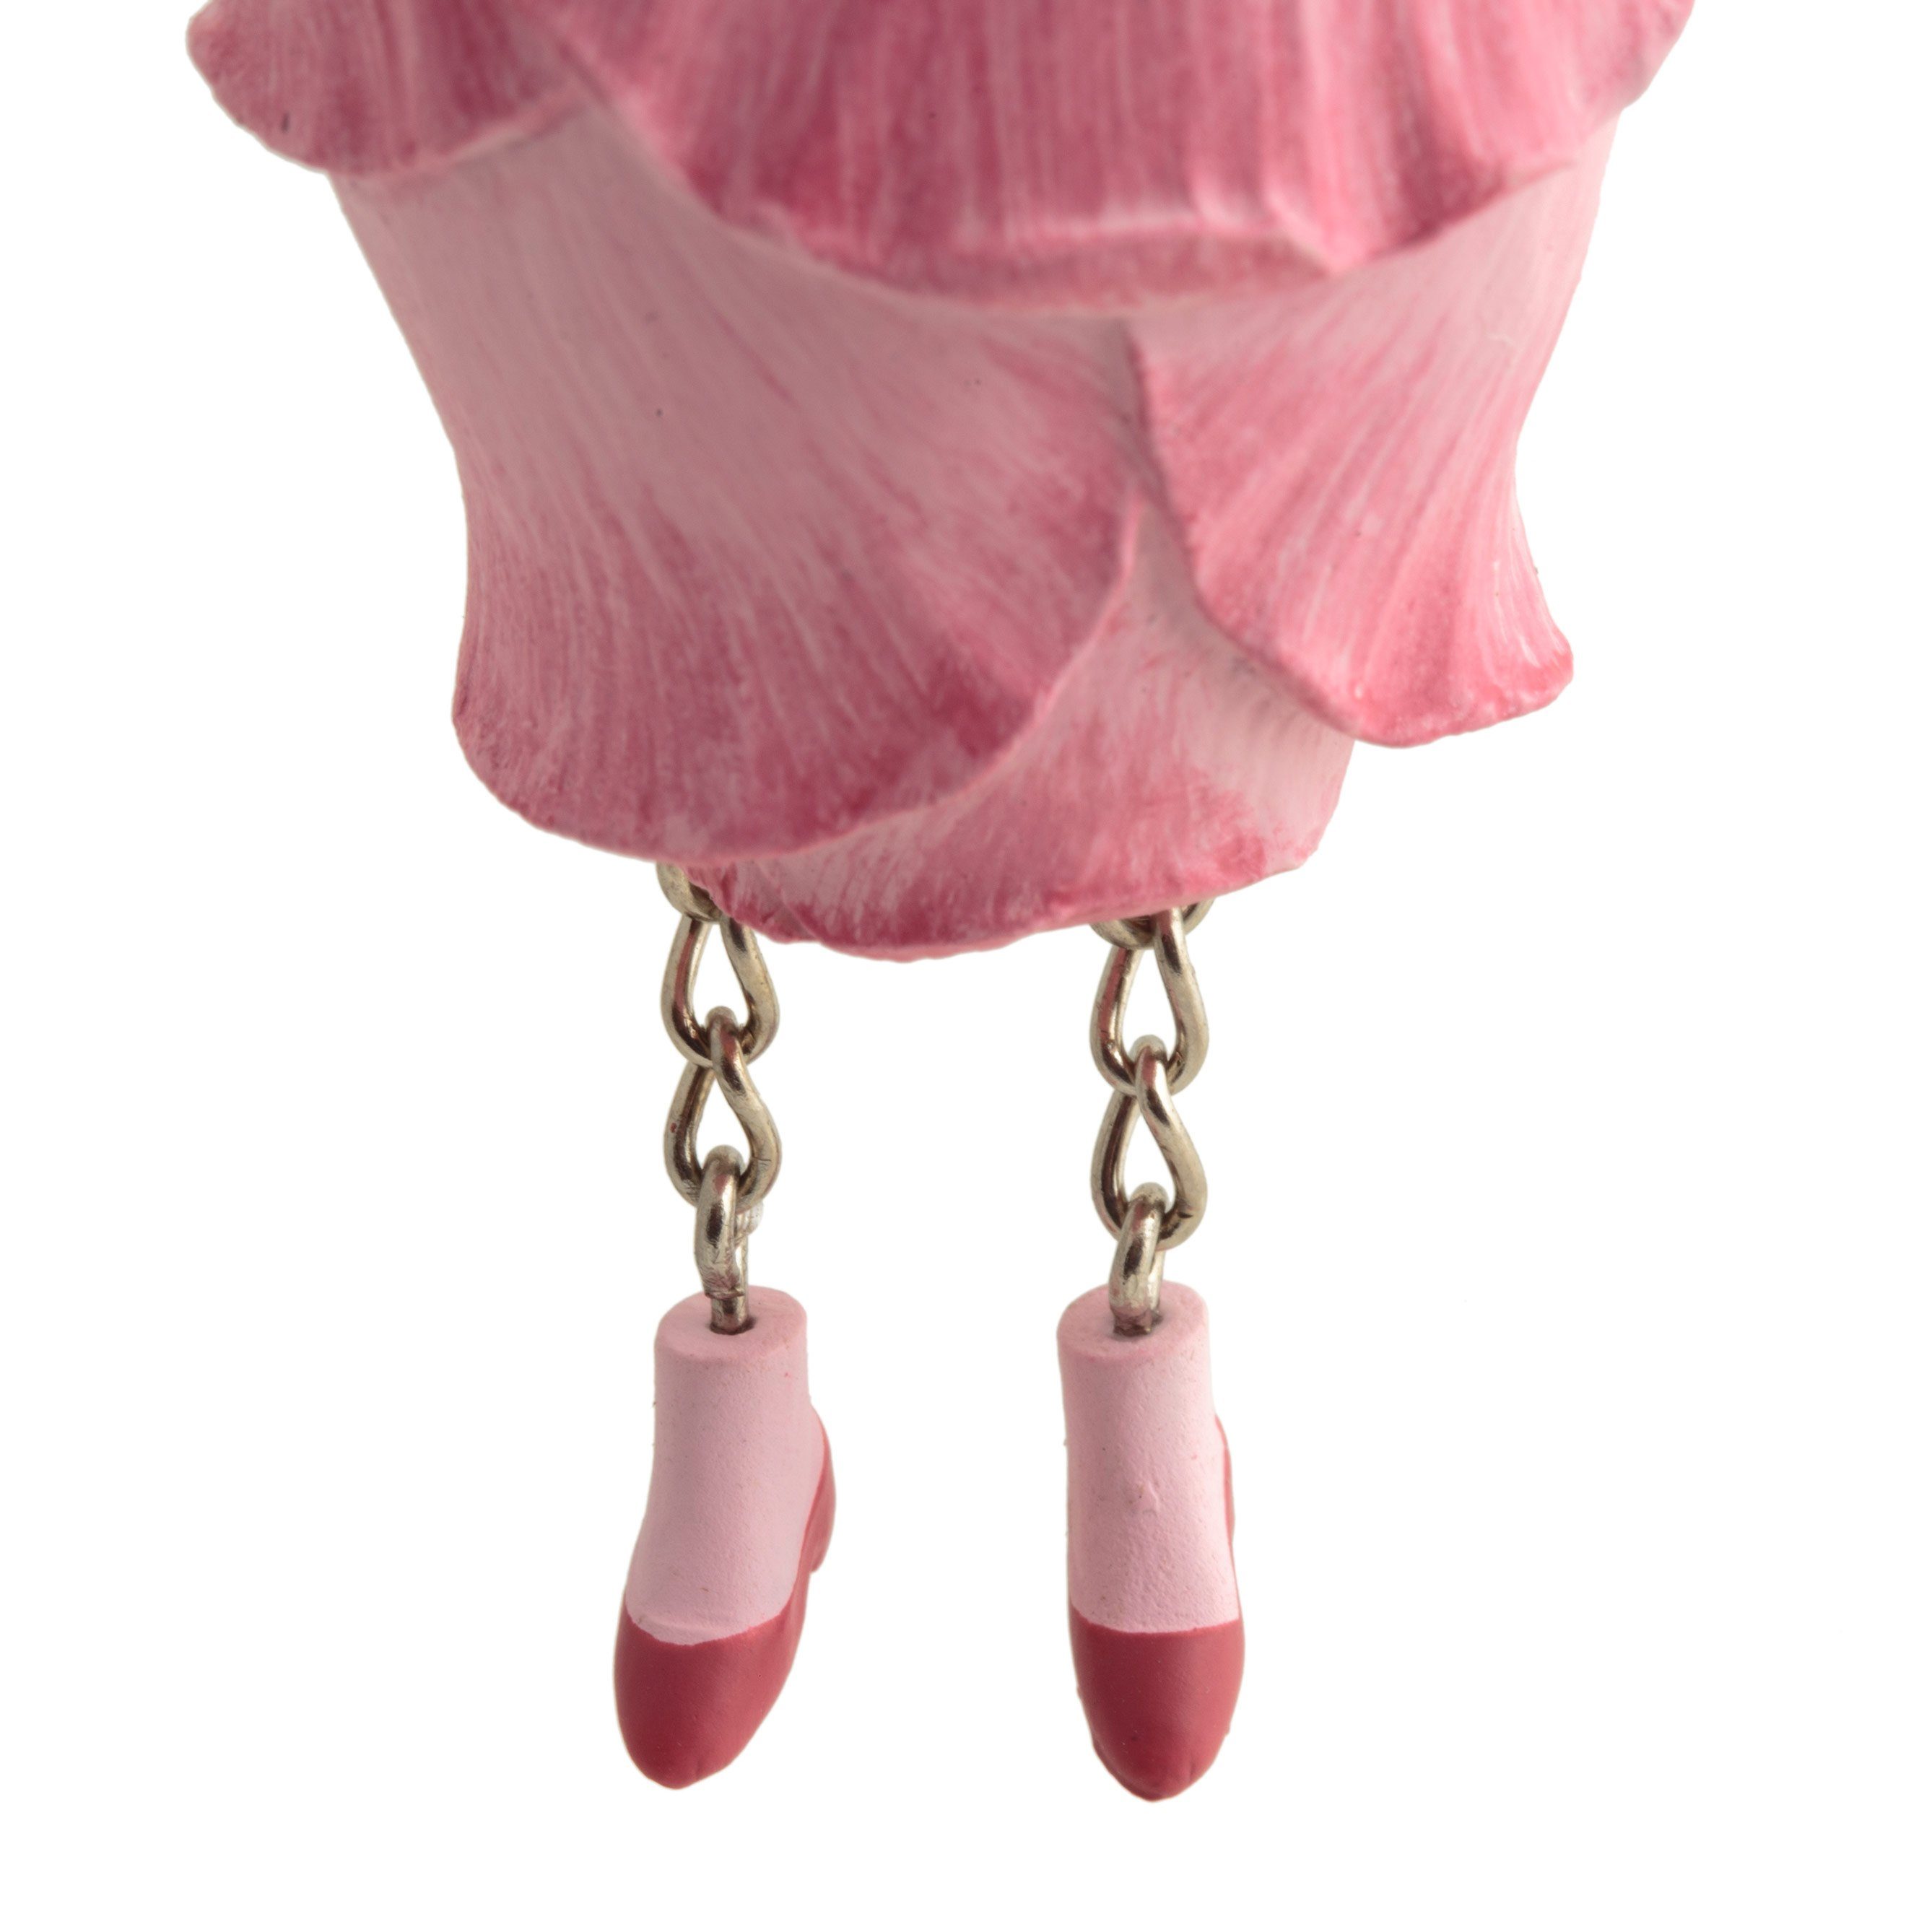 ROSEMARIE SCHULZ Heidelberg rosa handbemalt Deko-Objekt, Dekohänger Blumen Polyresin aus Blumenmädchen Rosenknospe Dekohänger zum Dekofigur Hängen